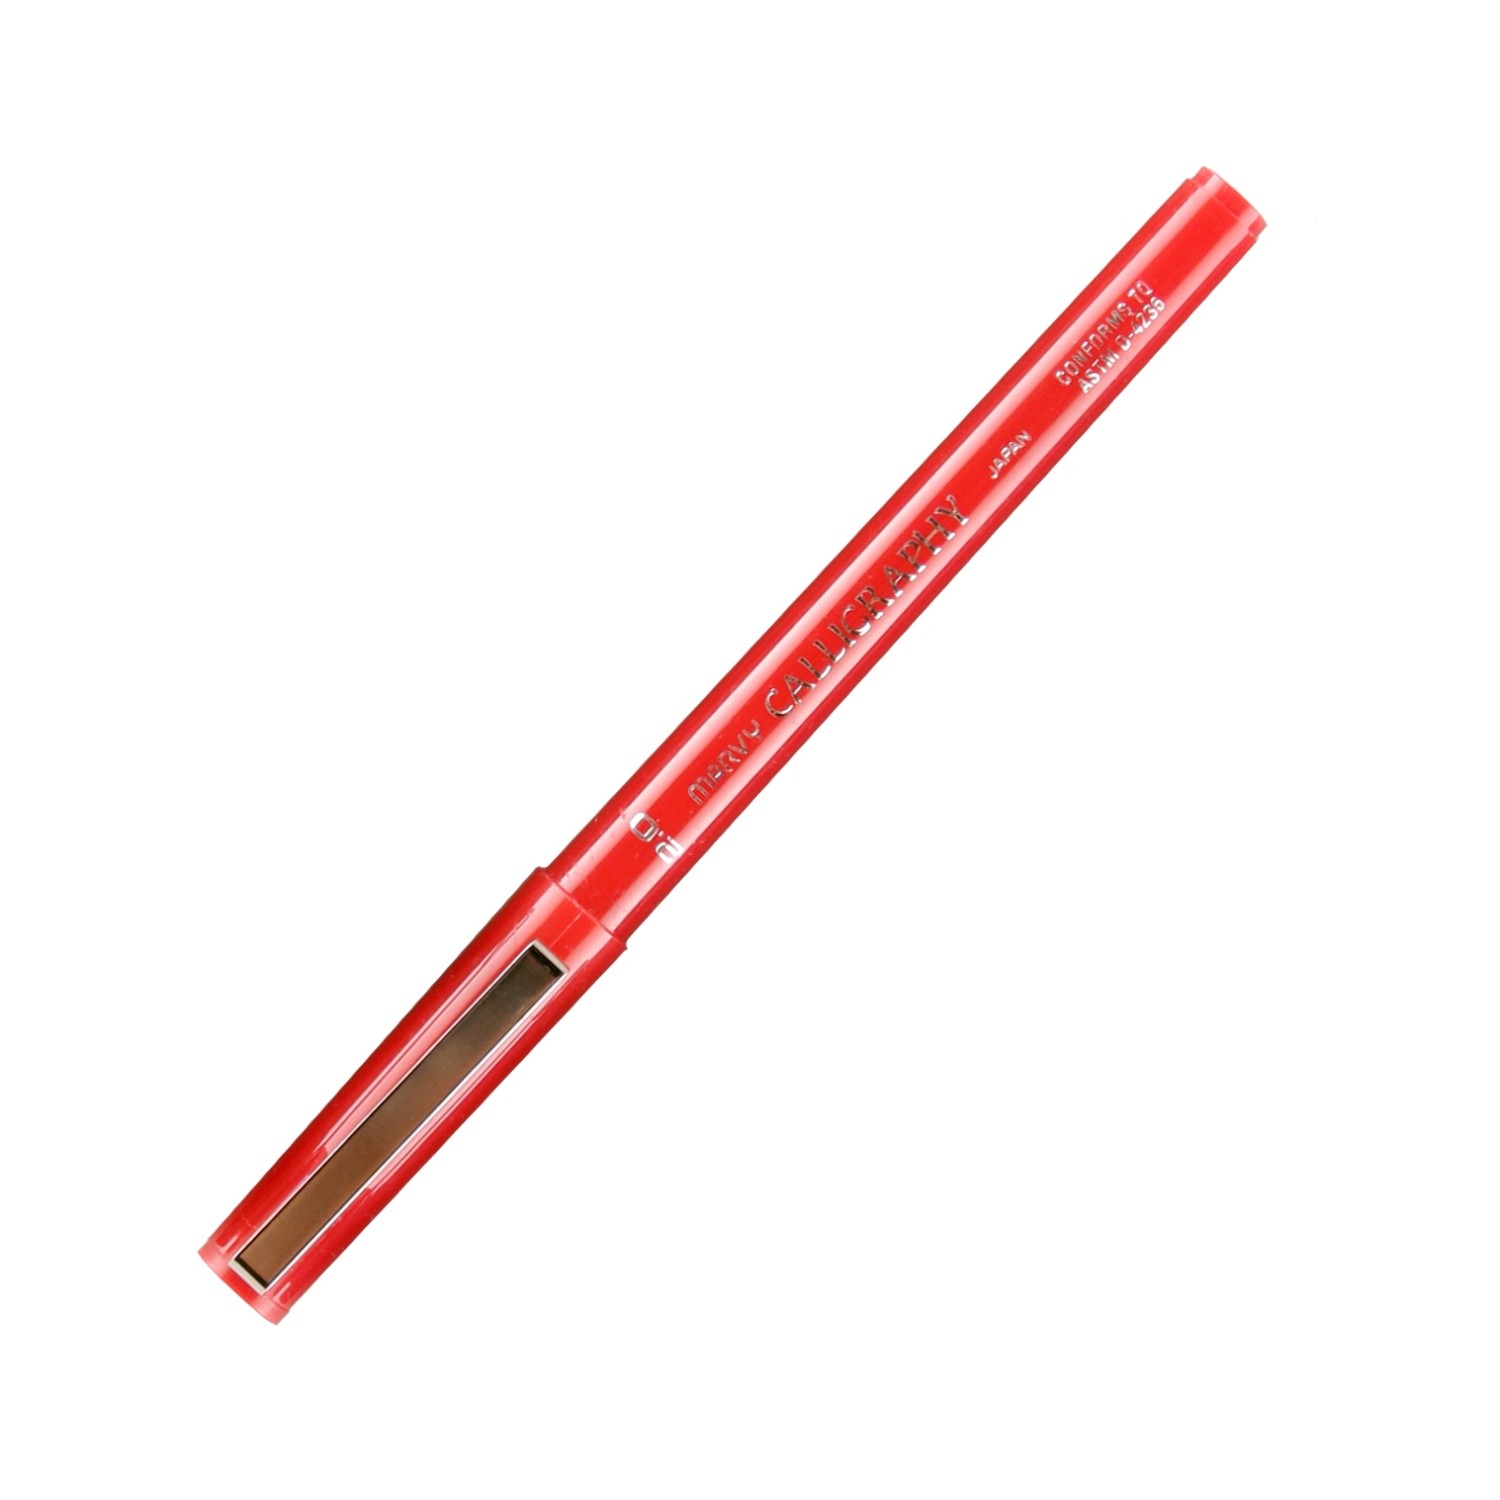 Marvy Calligraphy Pen, 2.0, Red